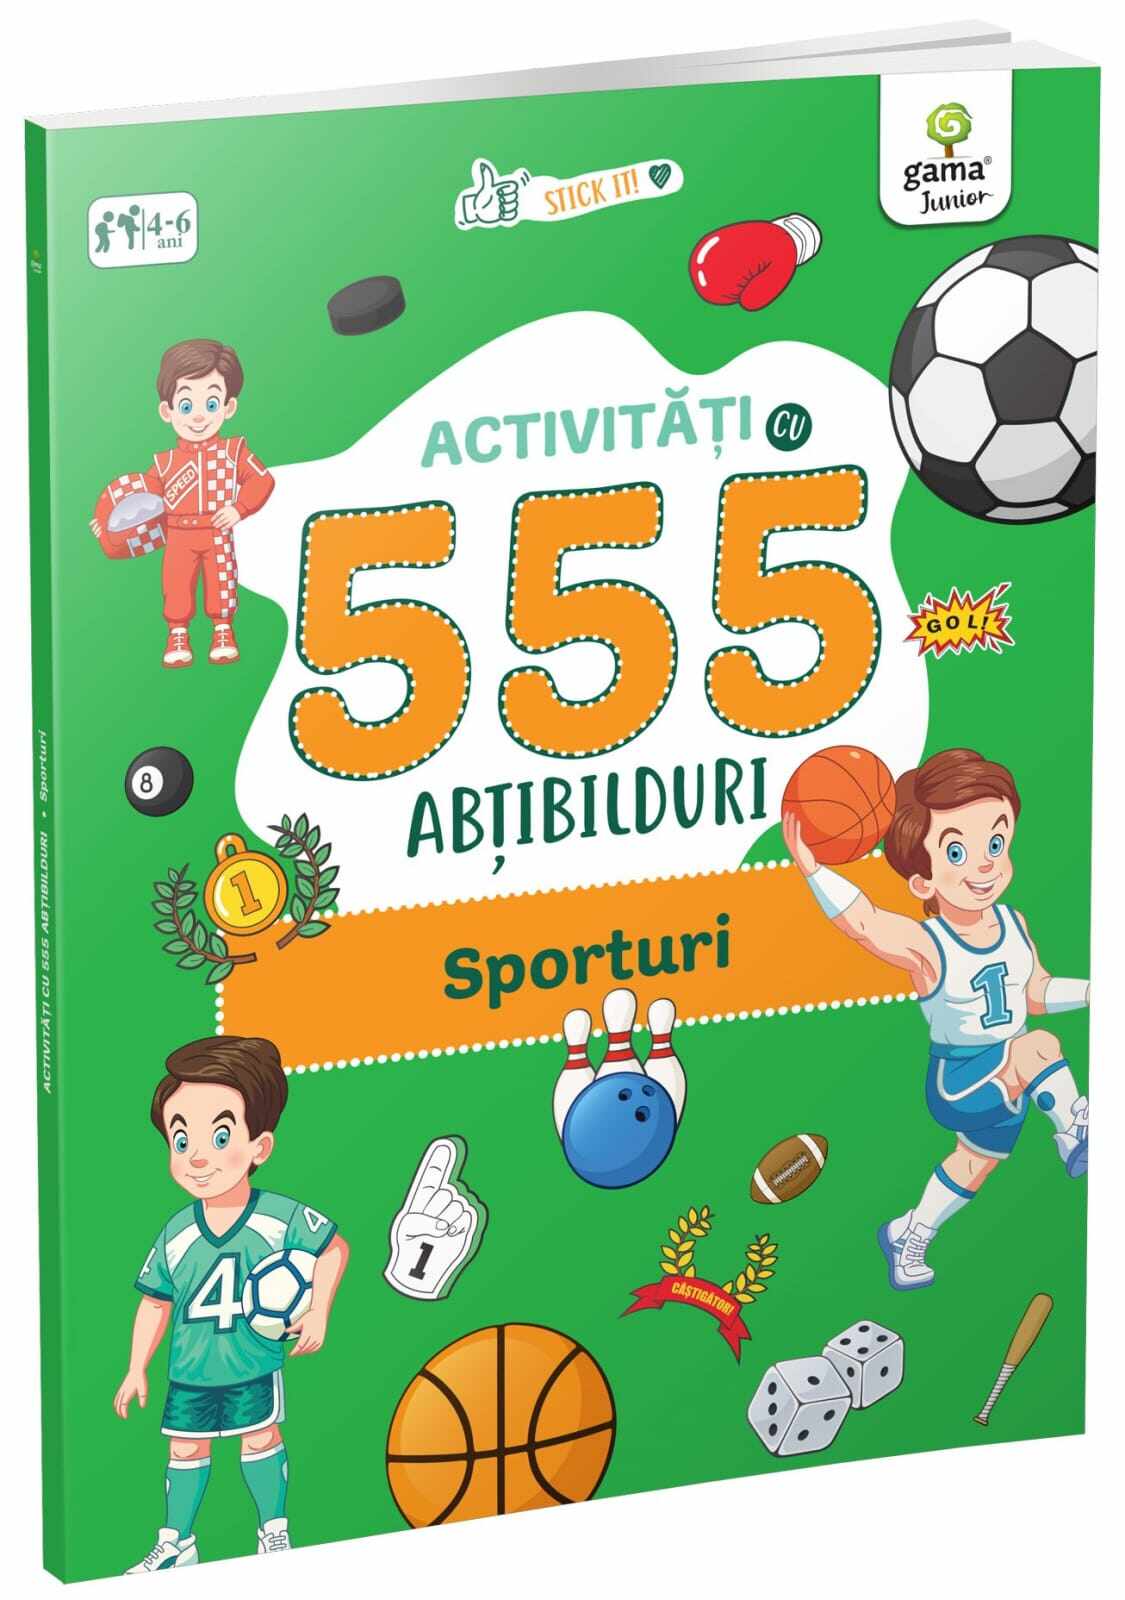 Sporturi, Editura Gama, 4-5 ani +